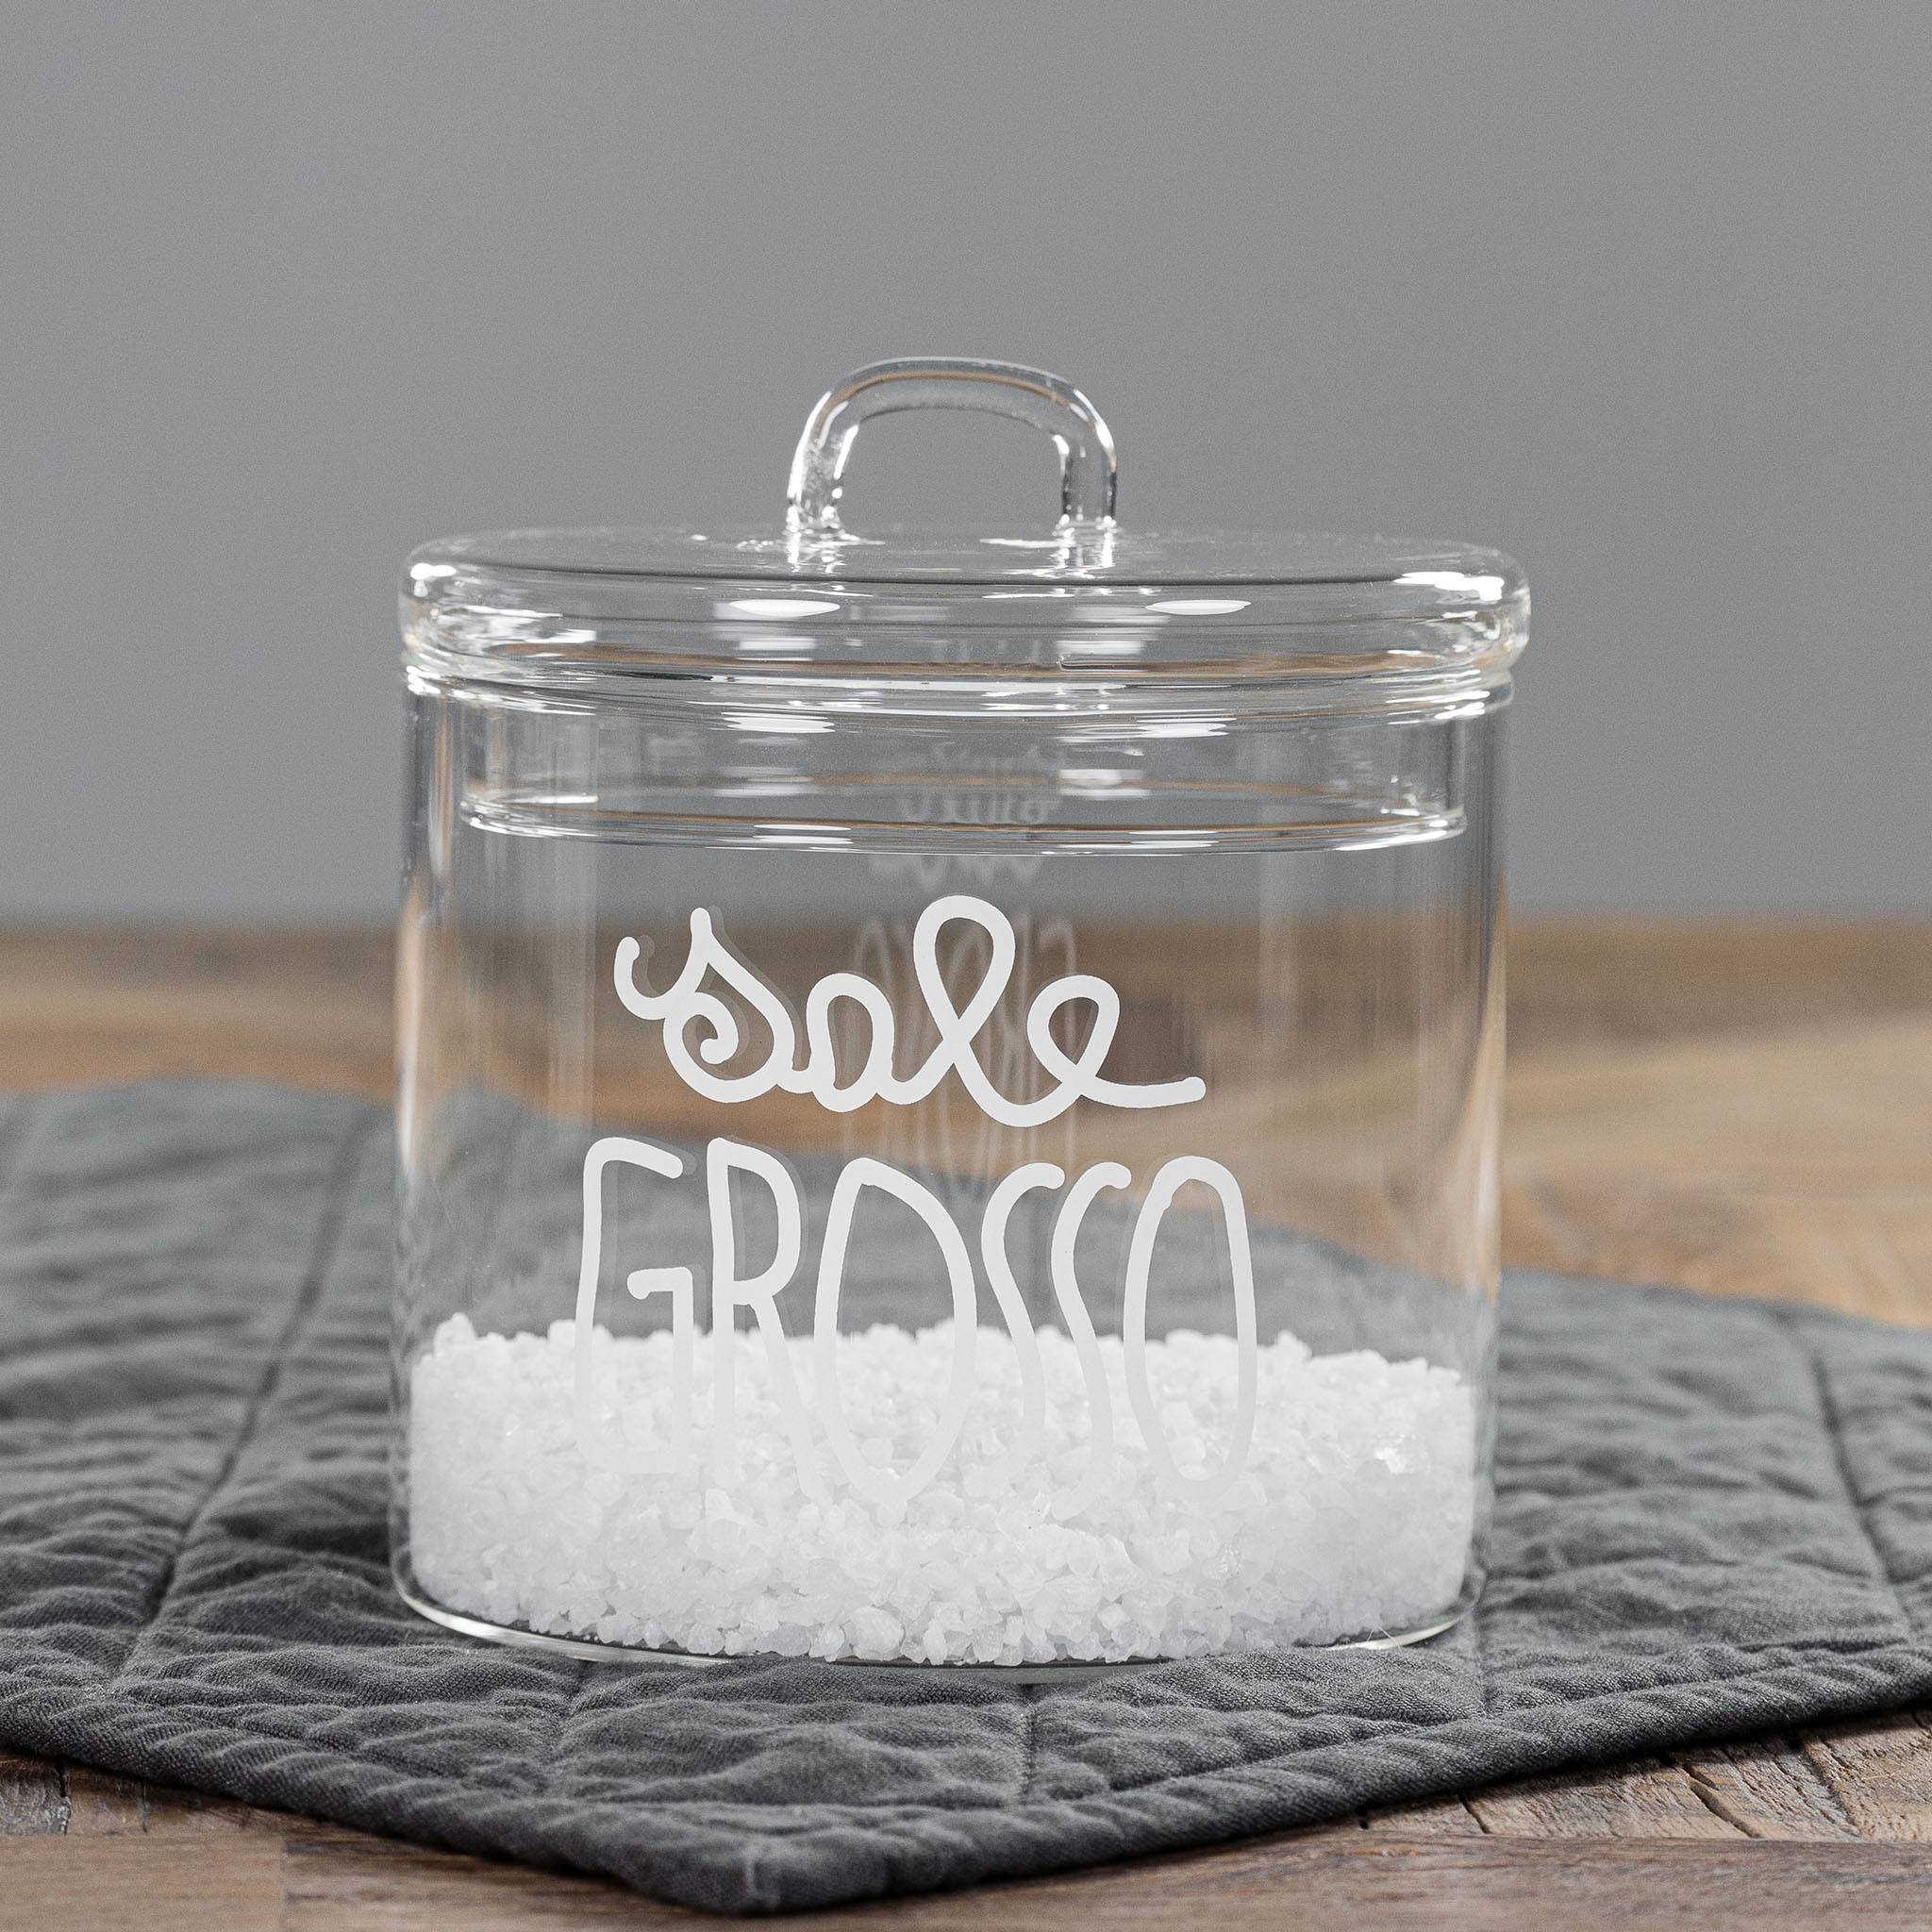 Baby big salt in white italics